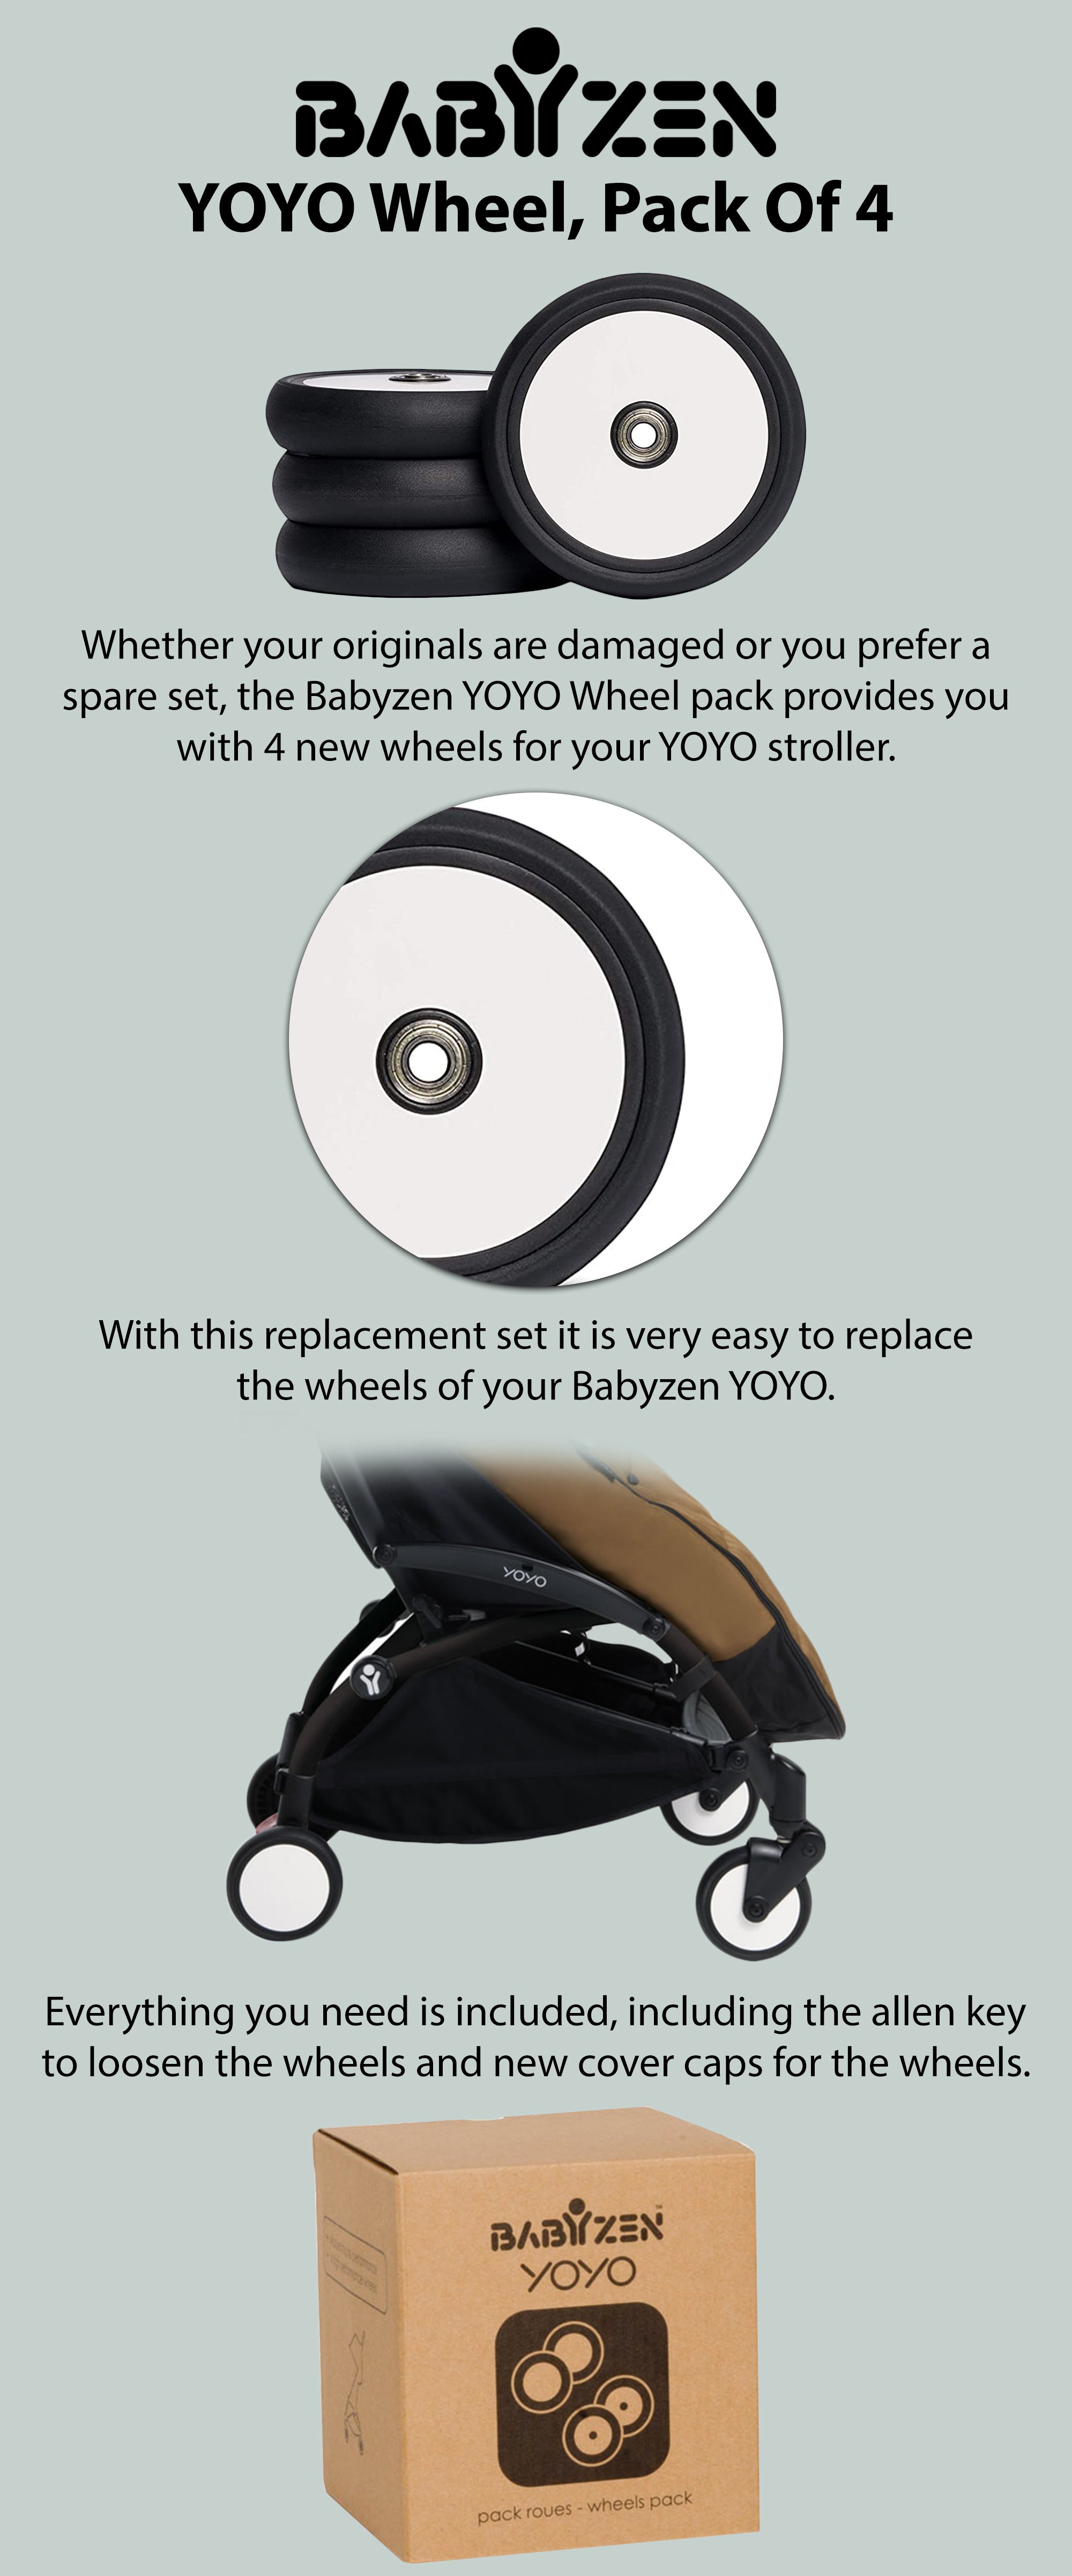 YOYO Plus Wheel, Pack Of 4 - Black/White